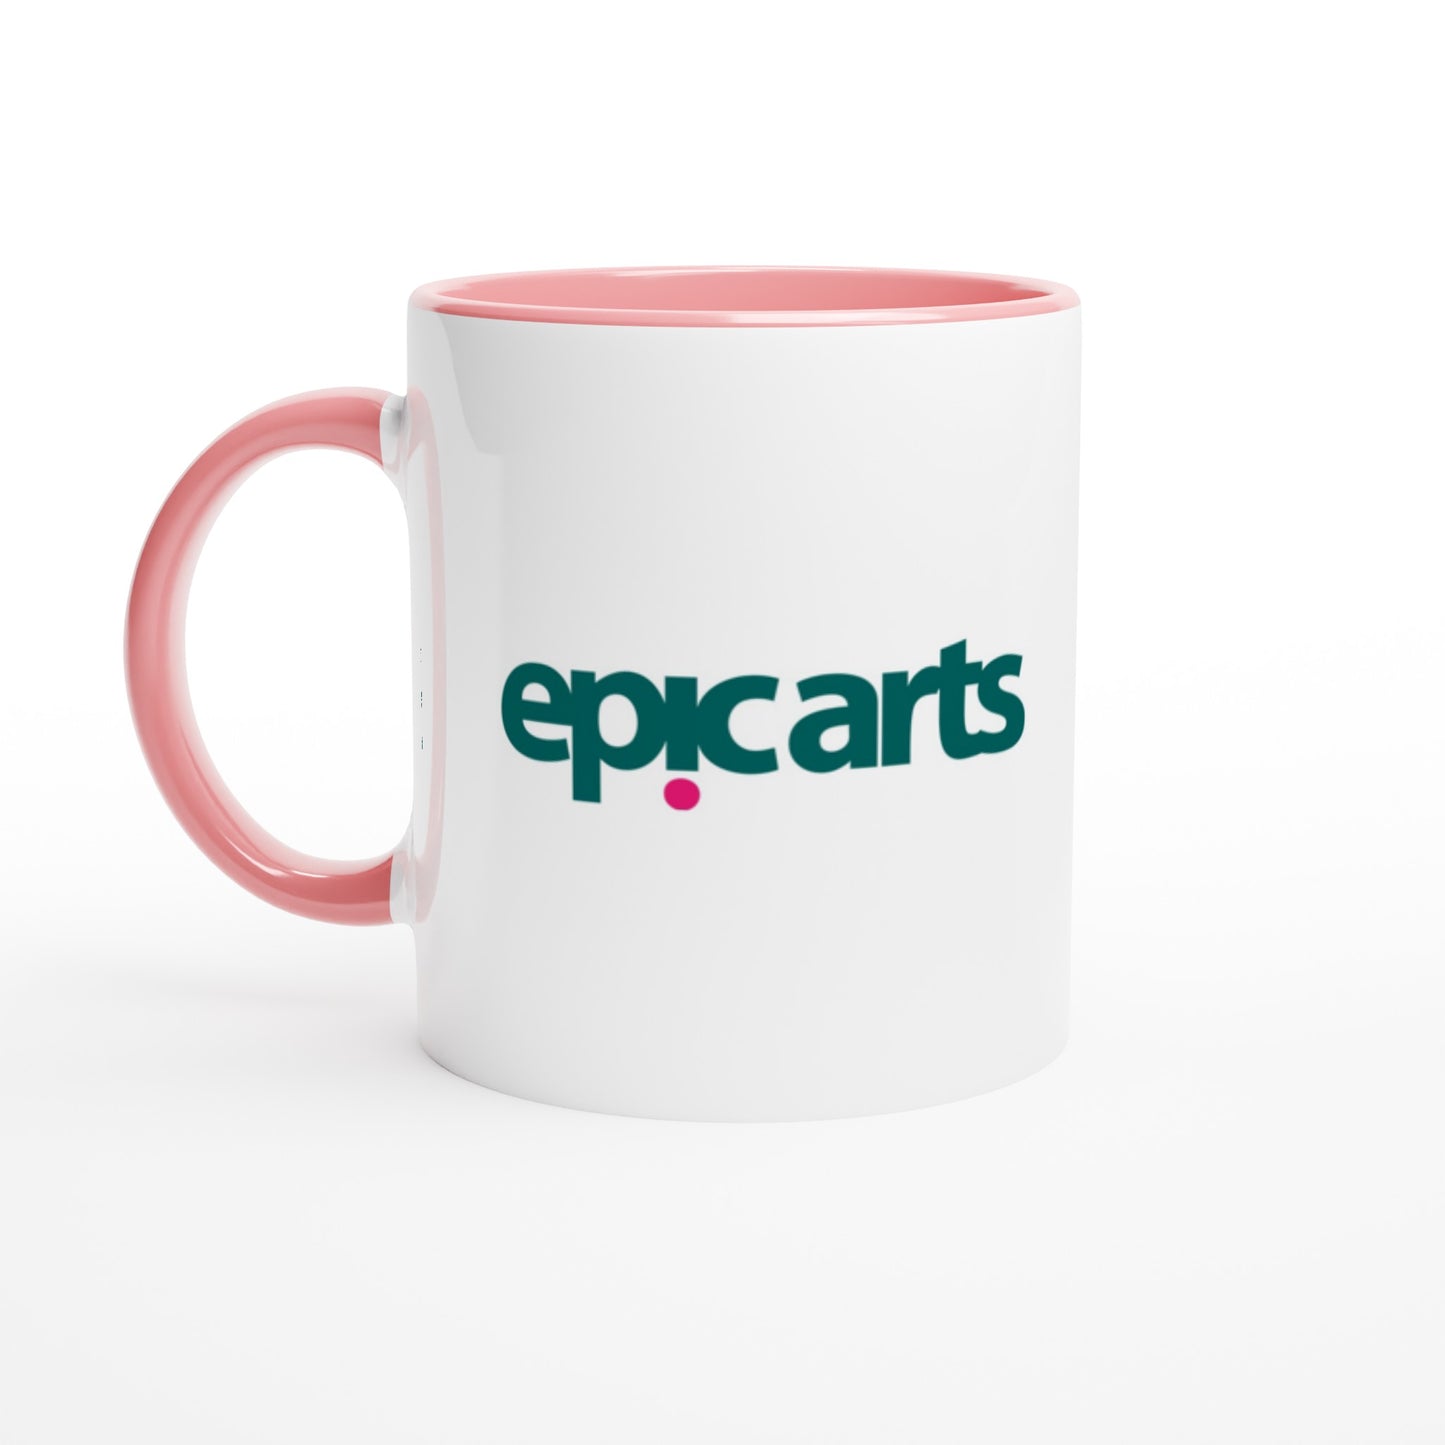 Epic Arts Charity 11oz Ceramic Mug